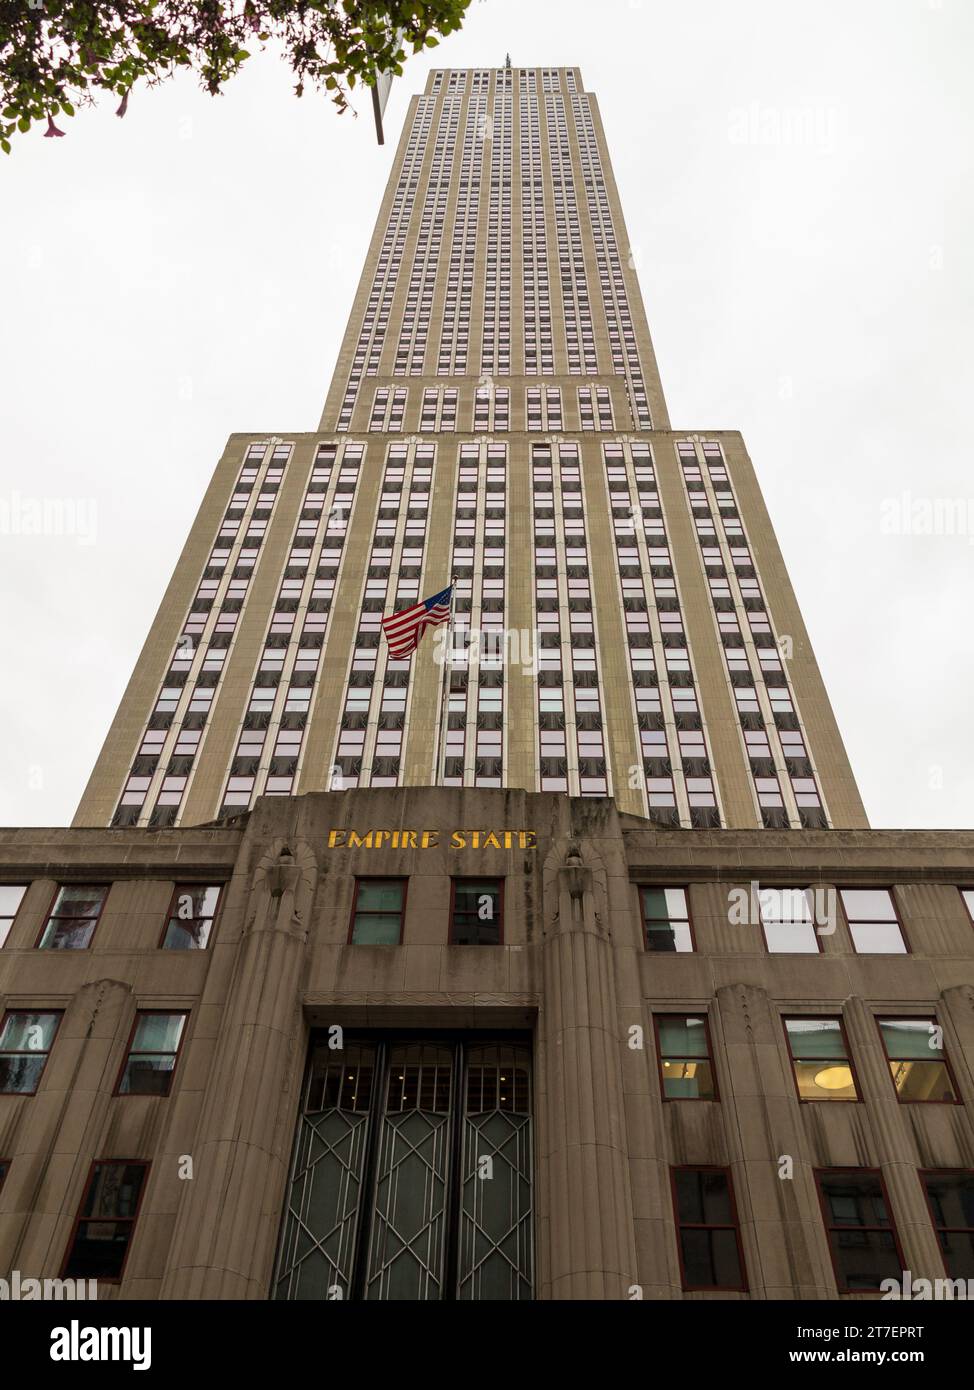 Vue à angle bas de l'Empire State Building, Manhattan, New York, USA. Banque D'Images